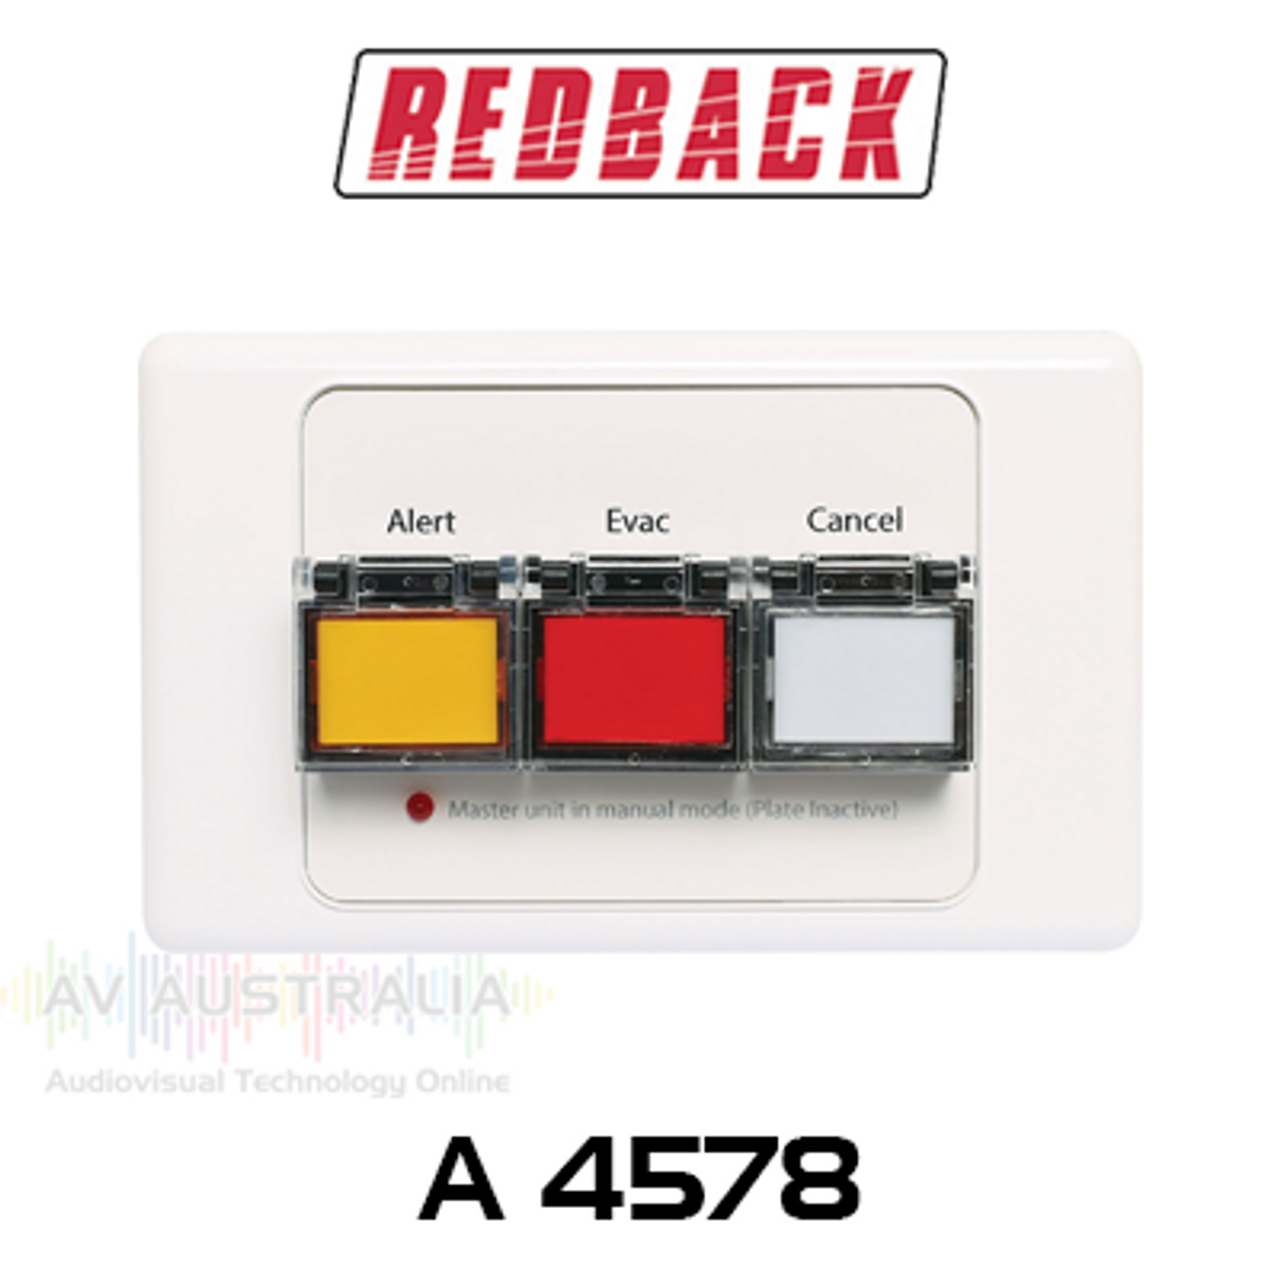 Redback Alert / Evac / Cancel Remote UTP Wallplate